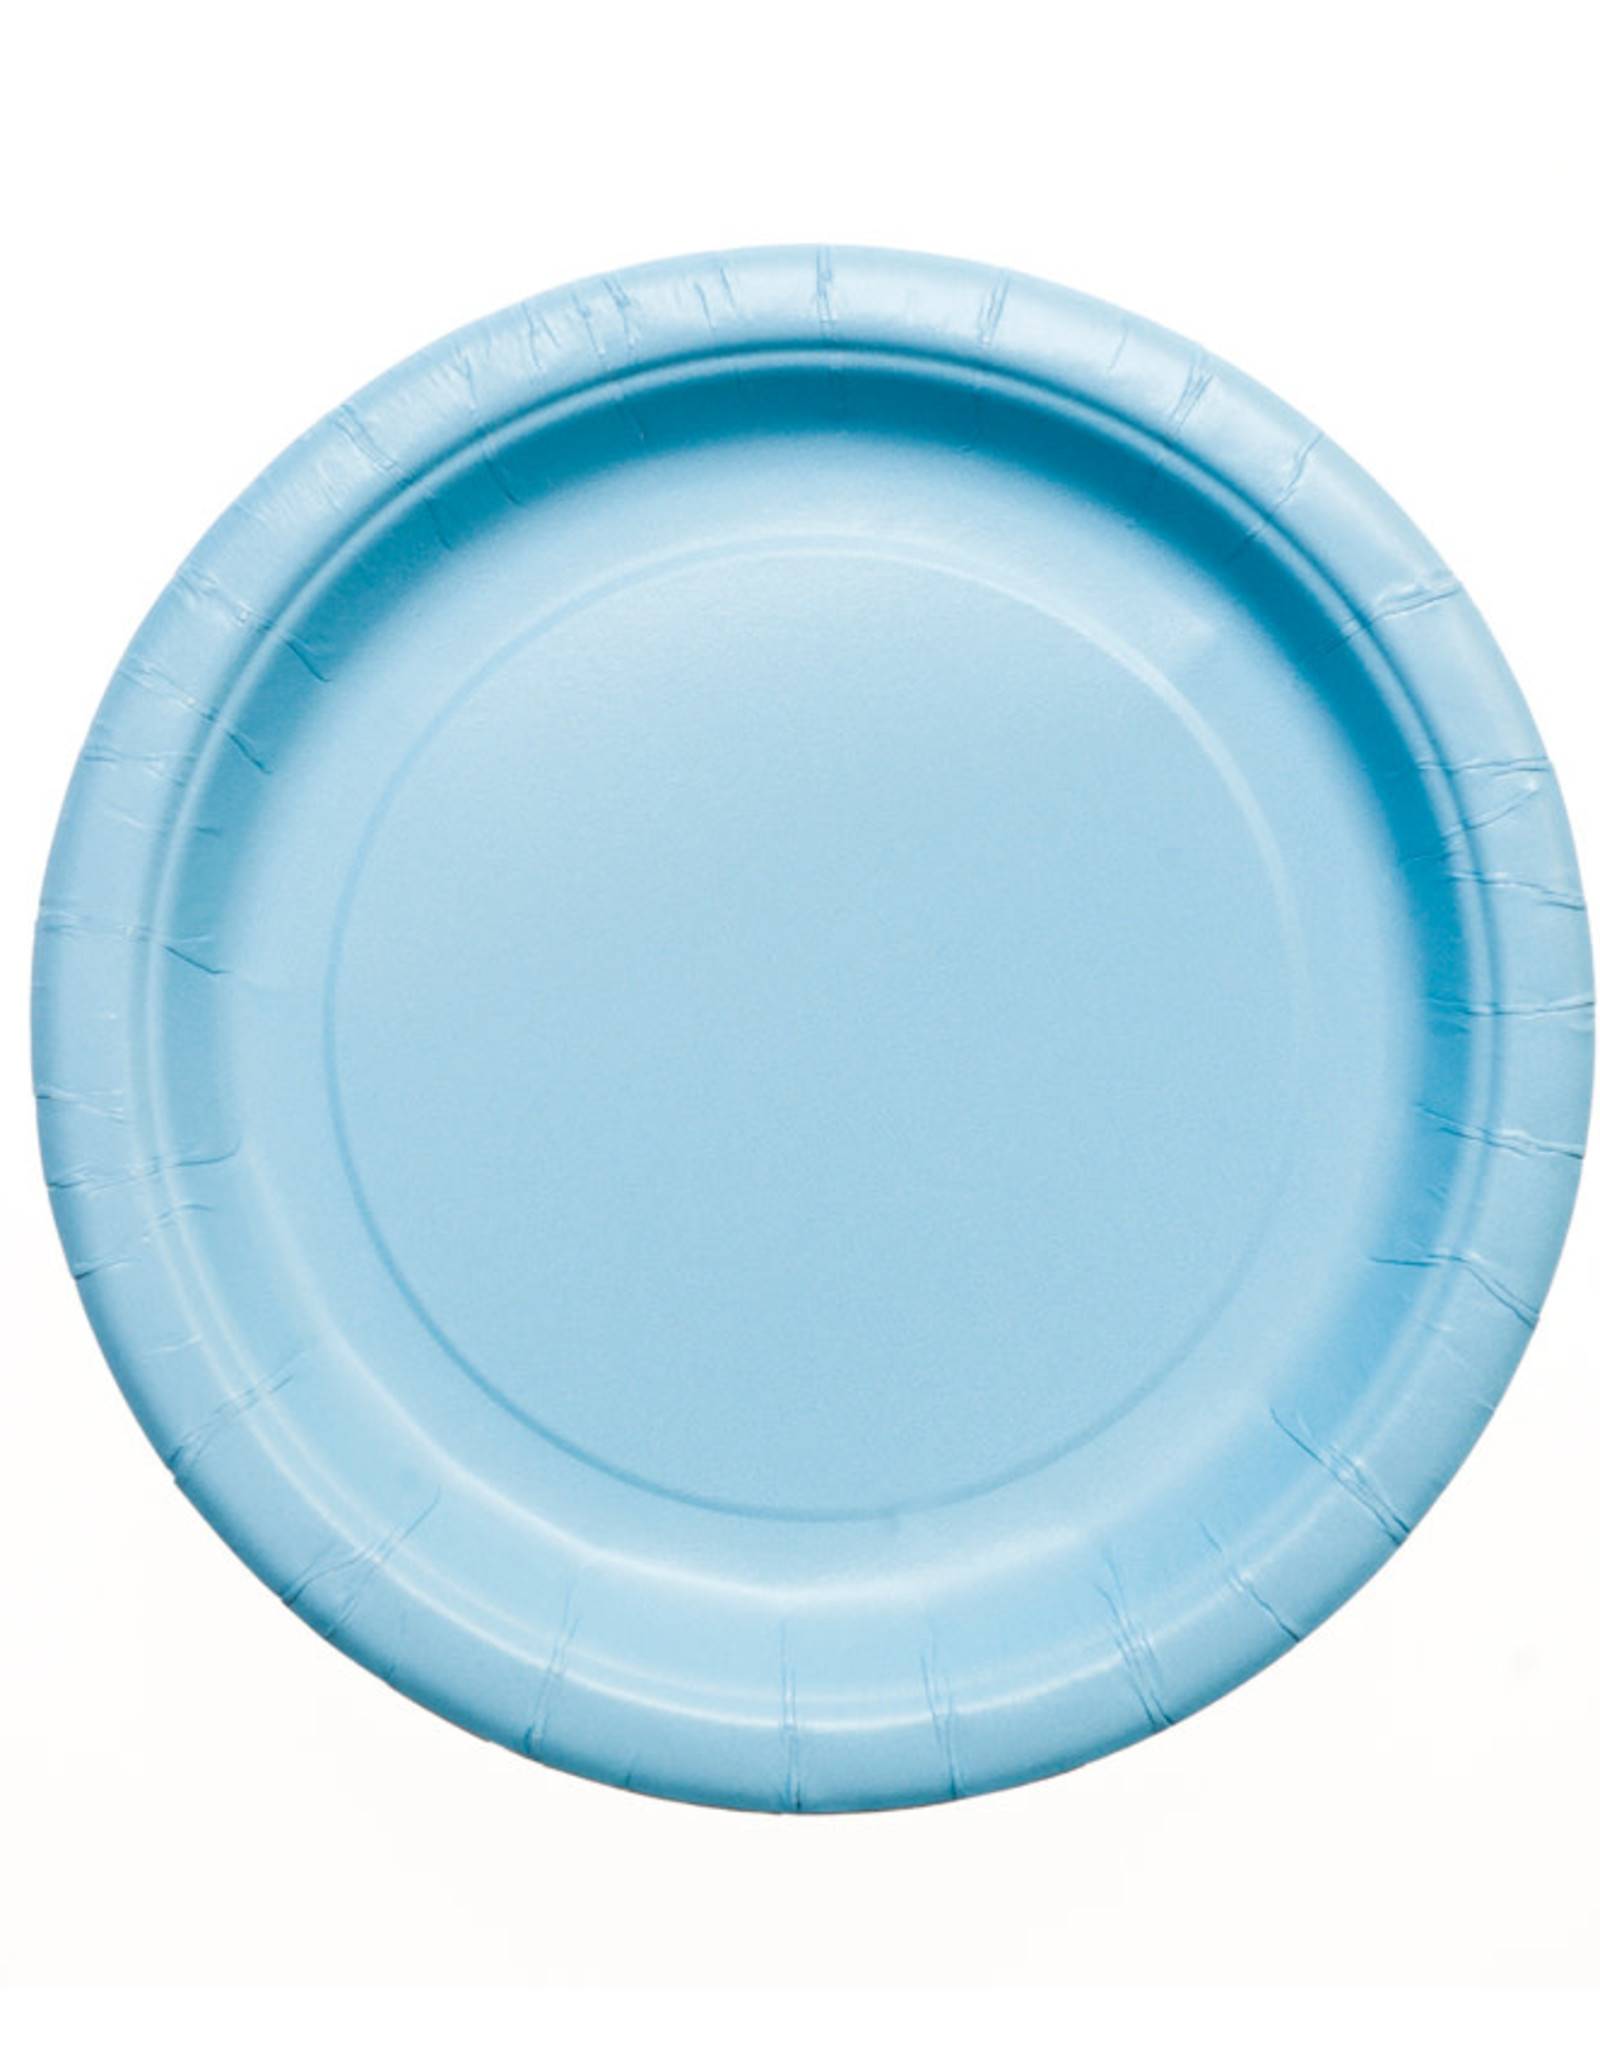 Light blue plates 5”